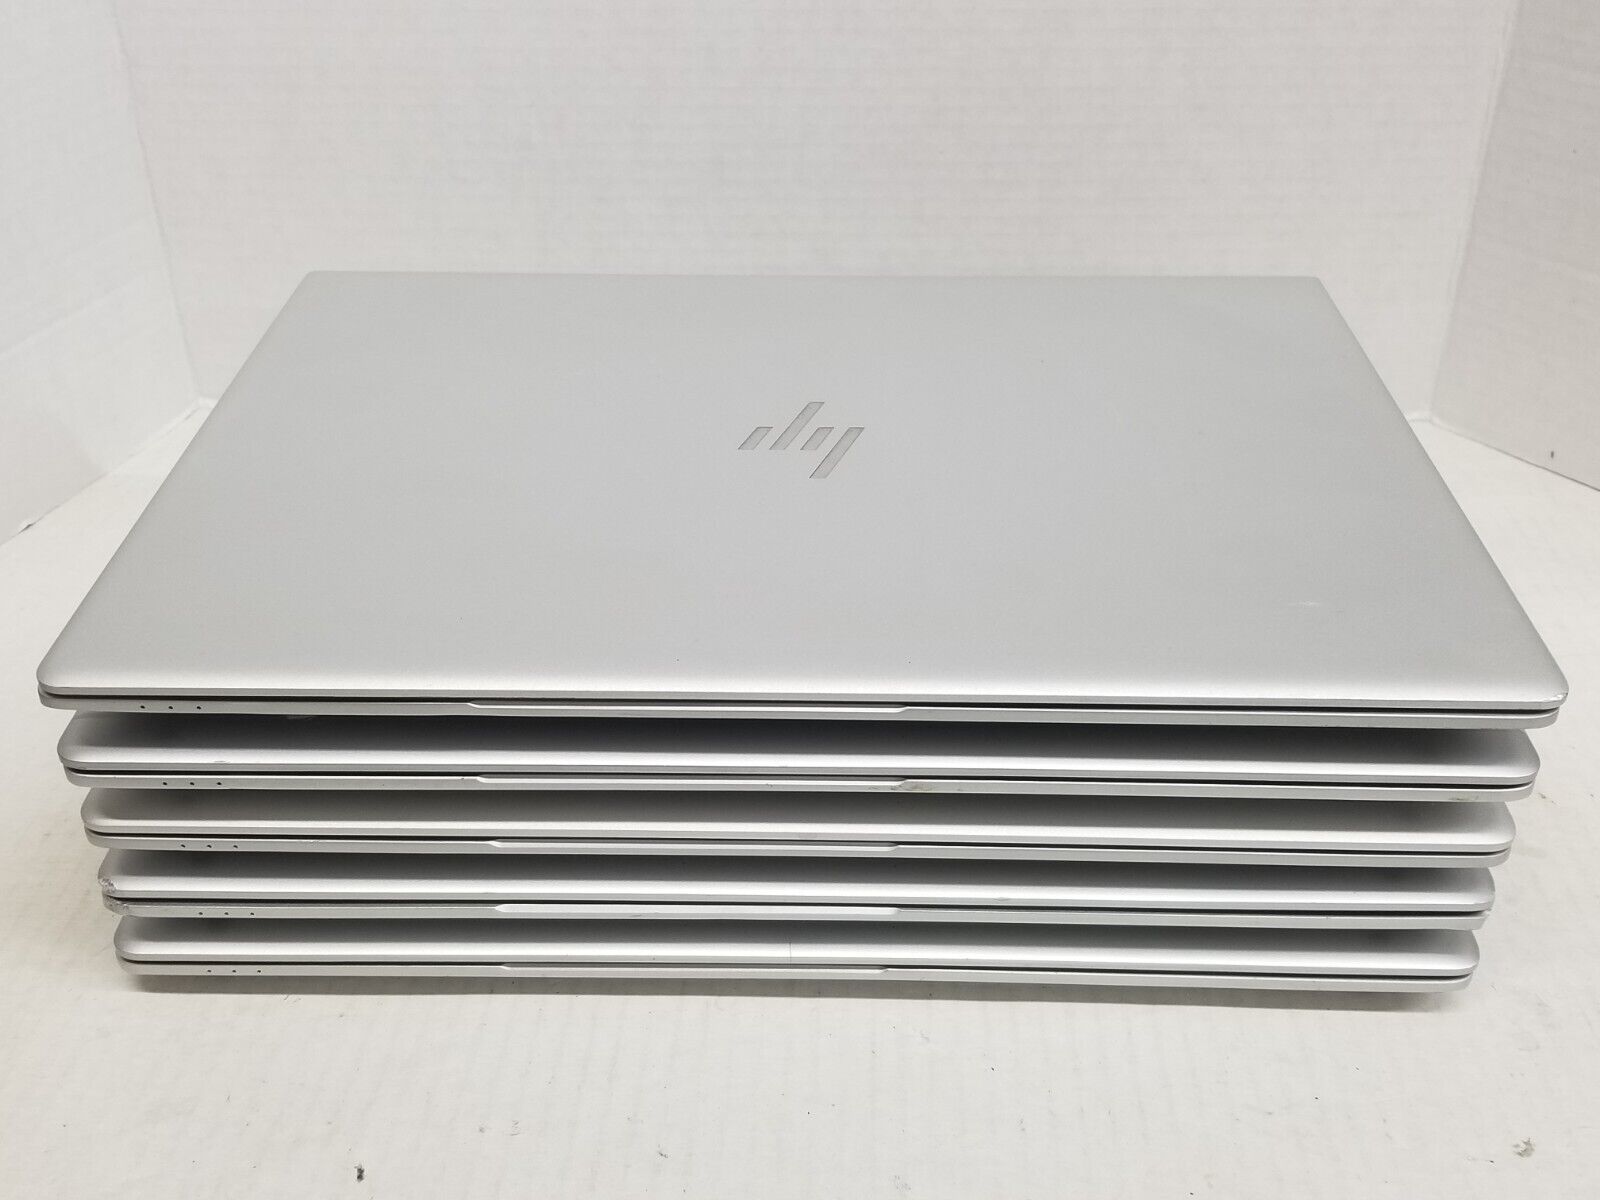 Lot of 5 HP EliteBook 840 G6 Laptops i5 16GB 256GB SSD Webcam Backlit FHD #2